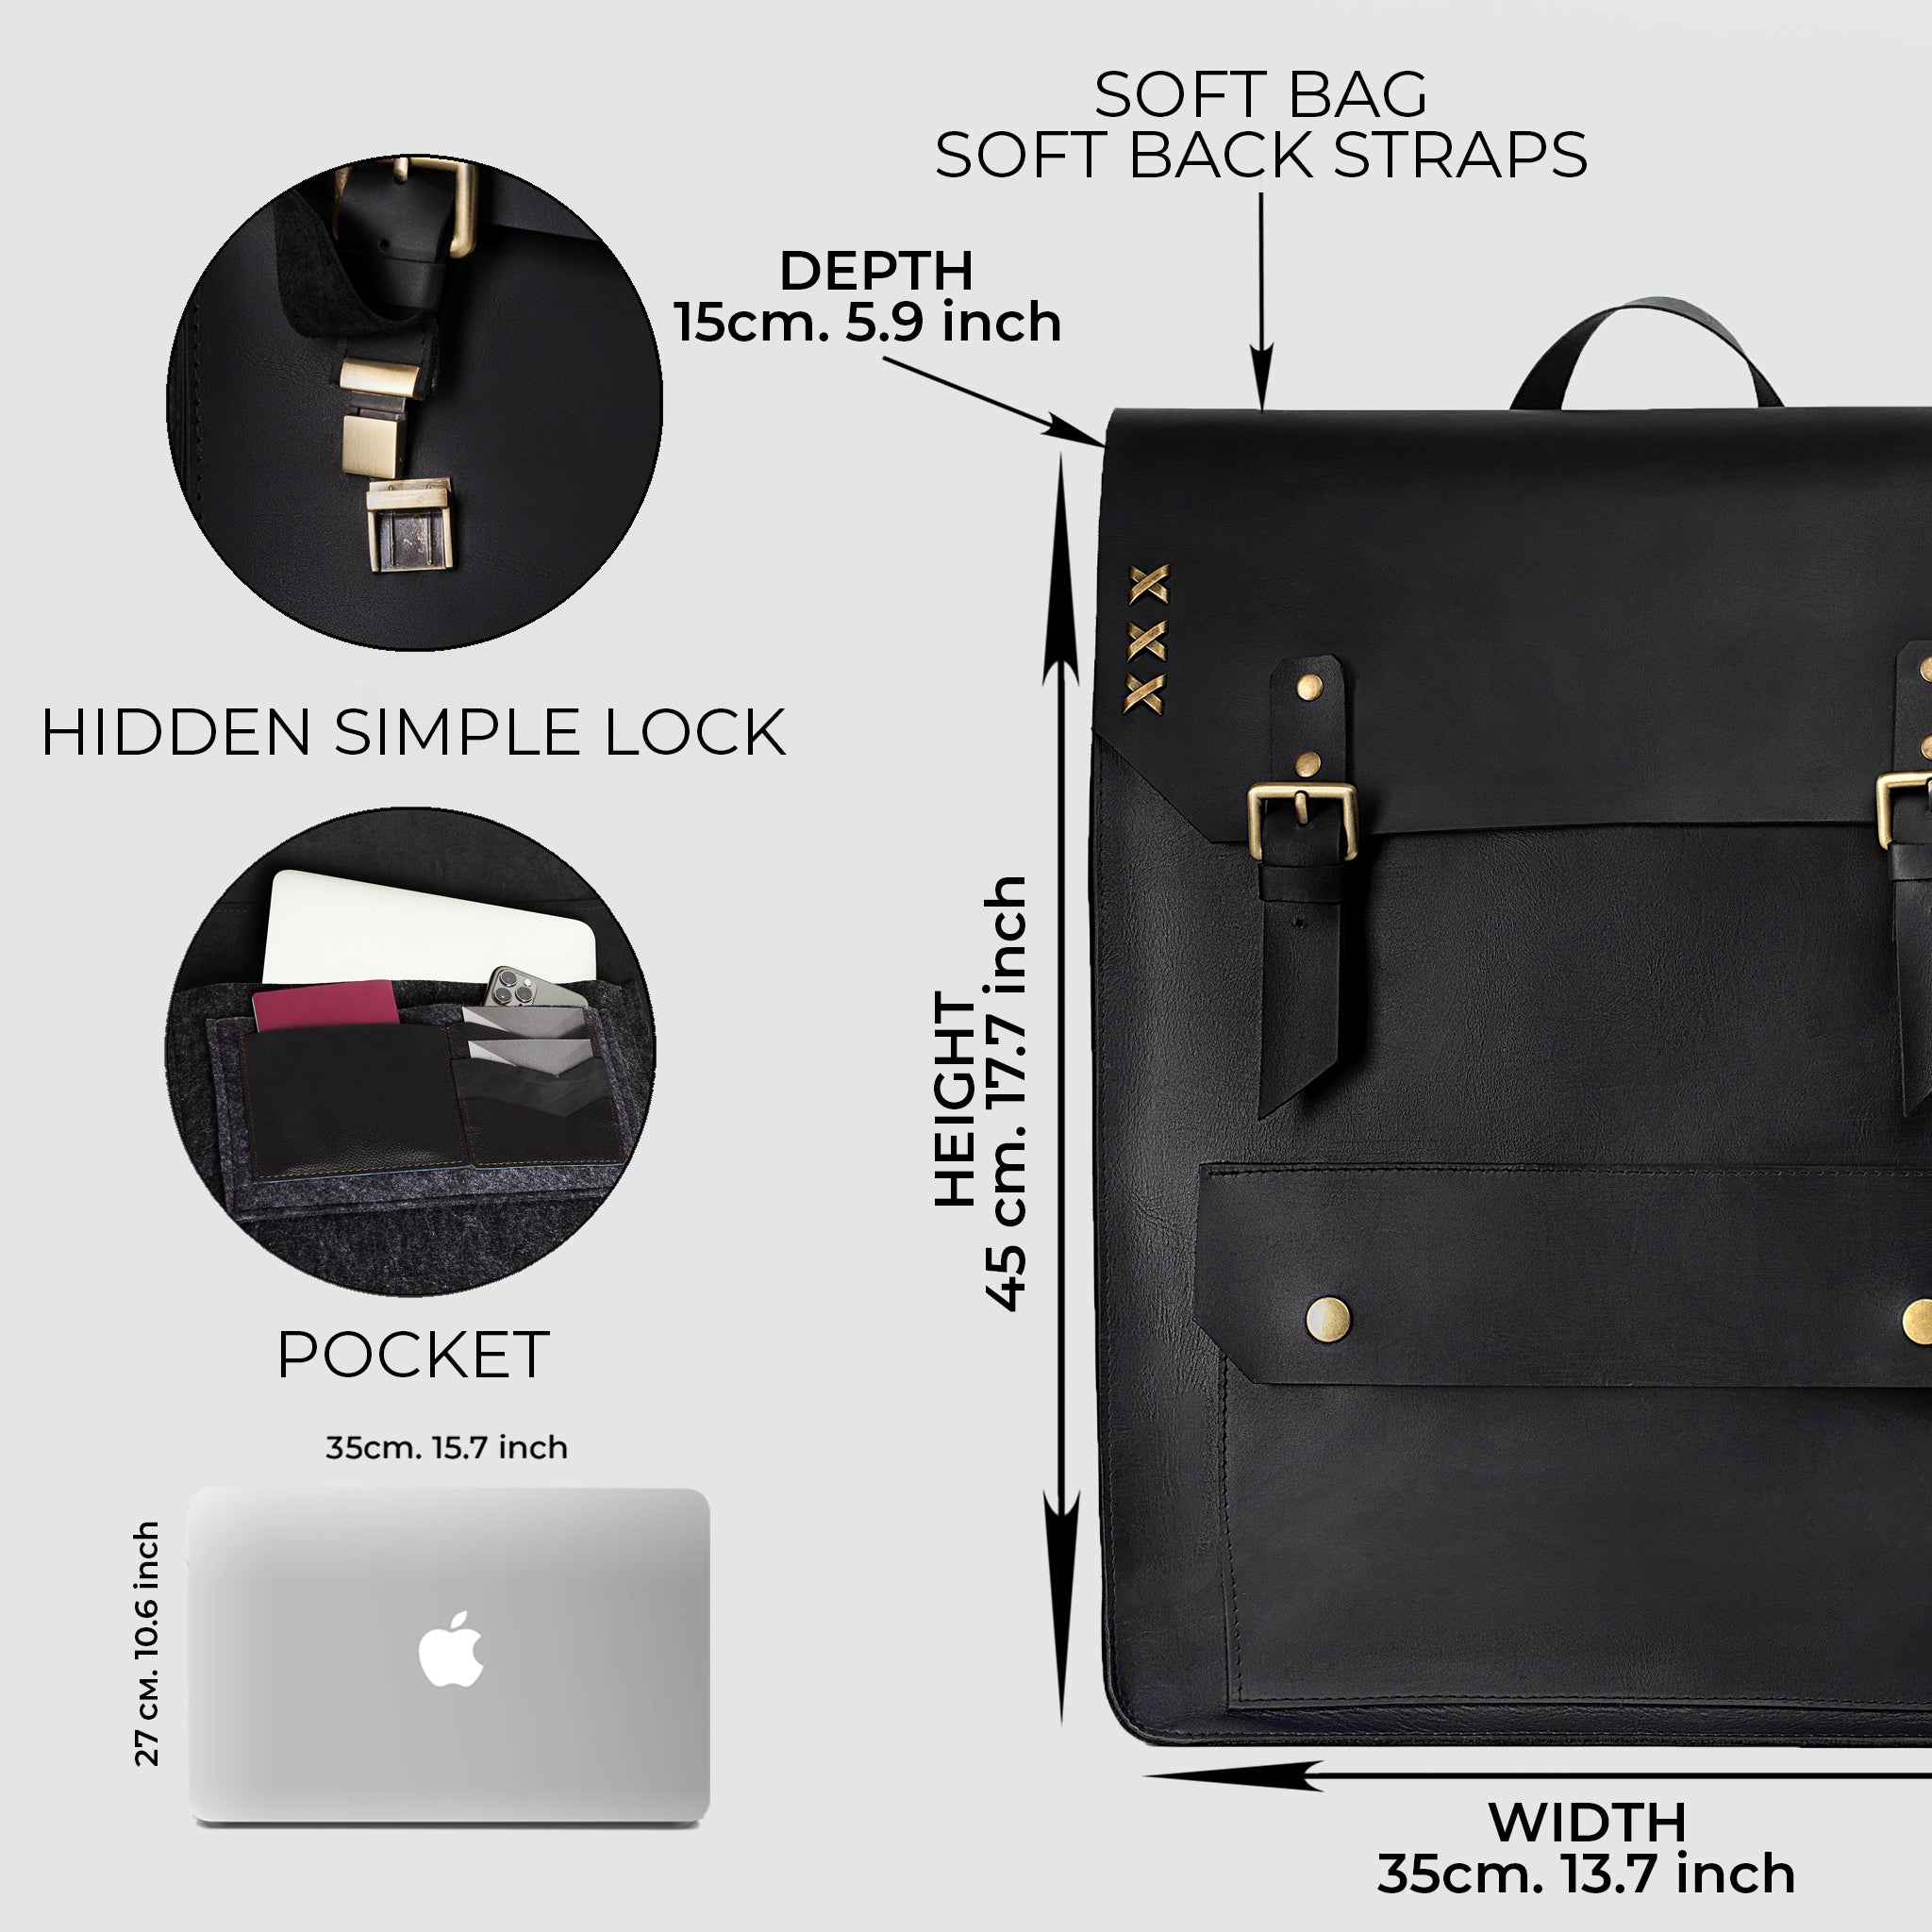 Leather Backpack  - Vondel